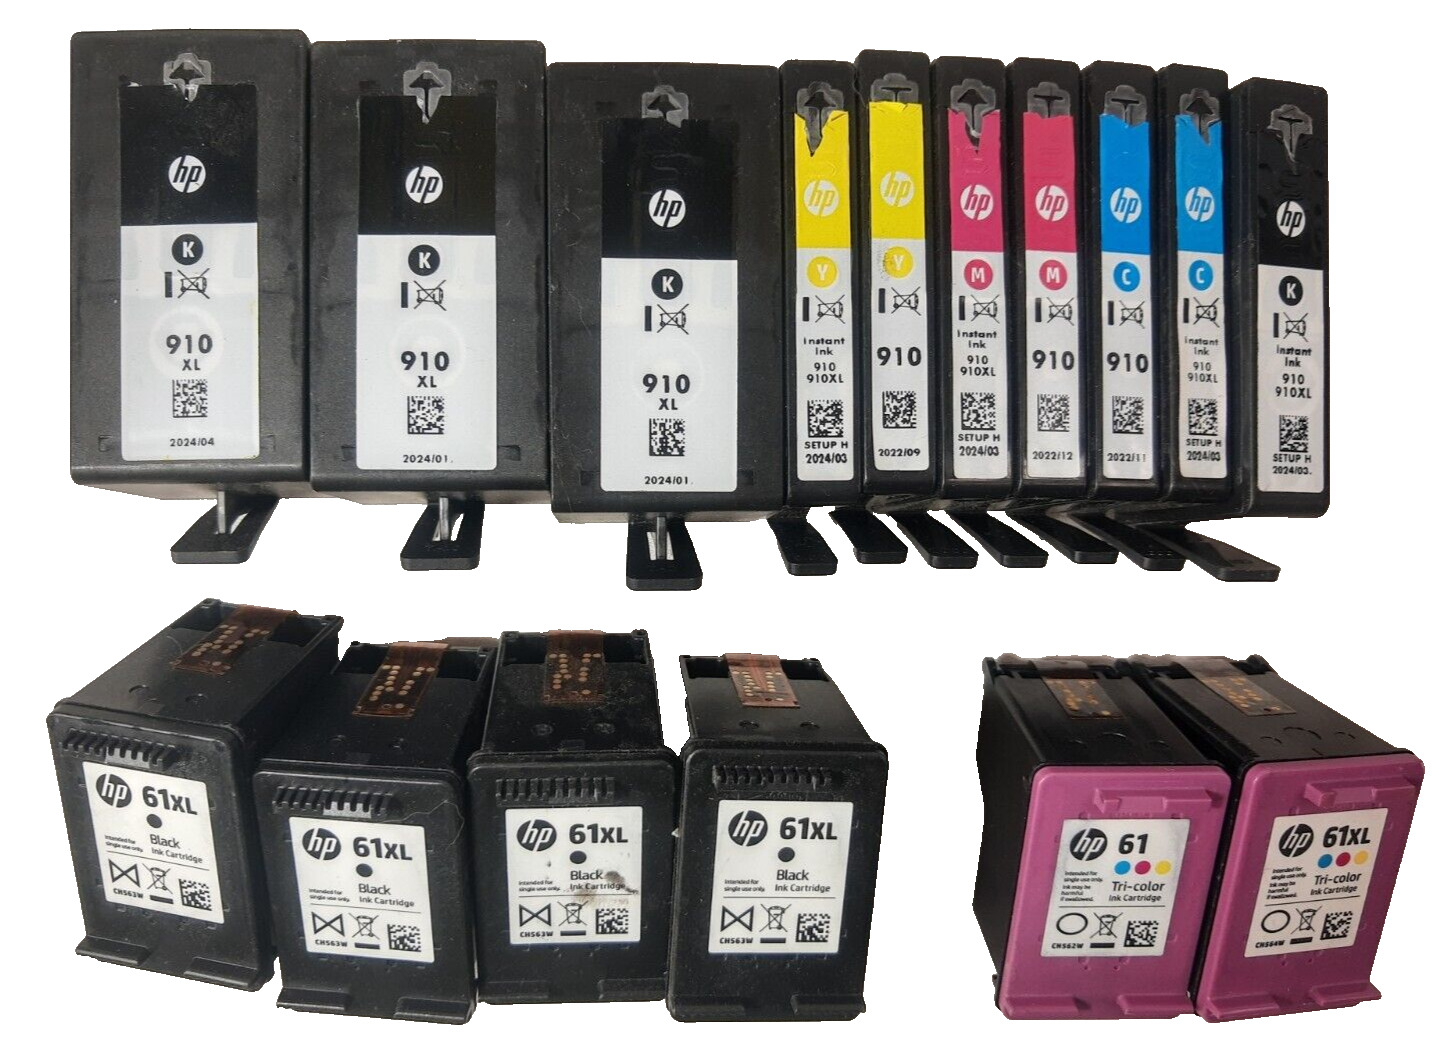 LOT 16 HP EMPTY Ink Cartridges Virgin 10 910 XL Black & 6 61 4 XL Black + colors